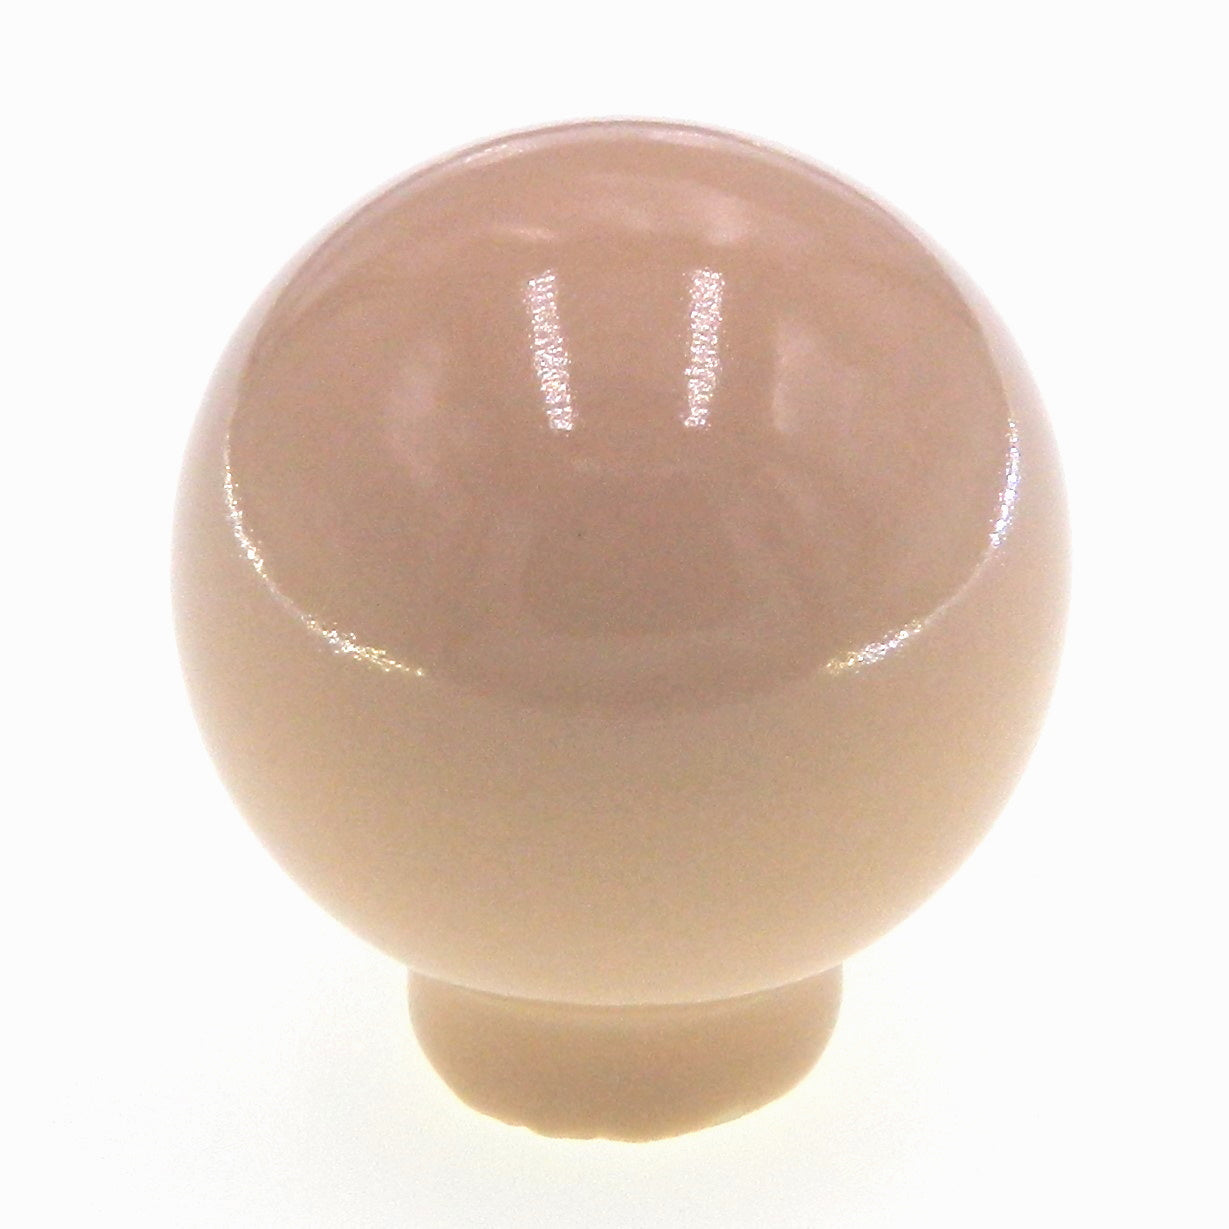 Amerock Ceramics Almond 1 1/4" Round Cabinet Knob Pull BP72001-AM